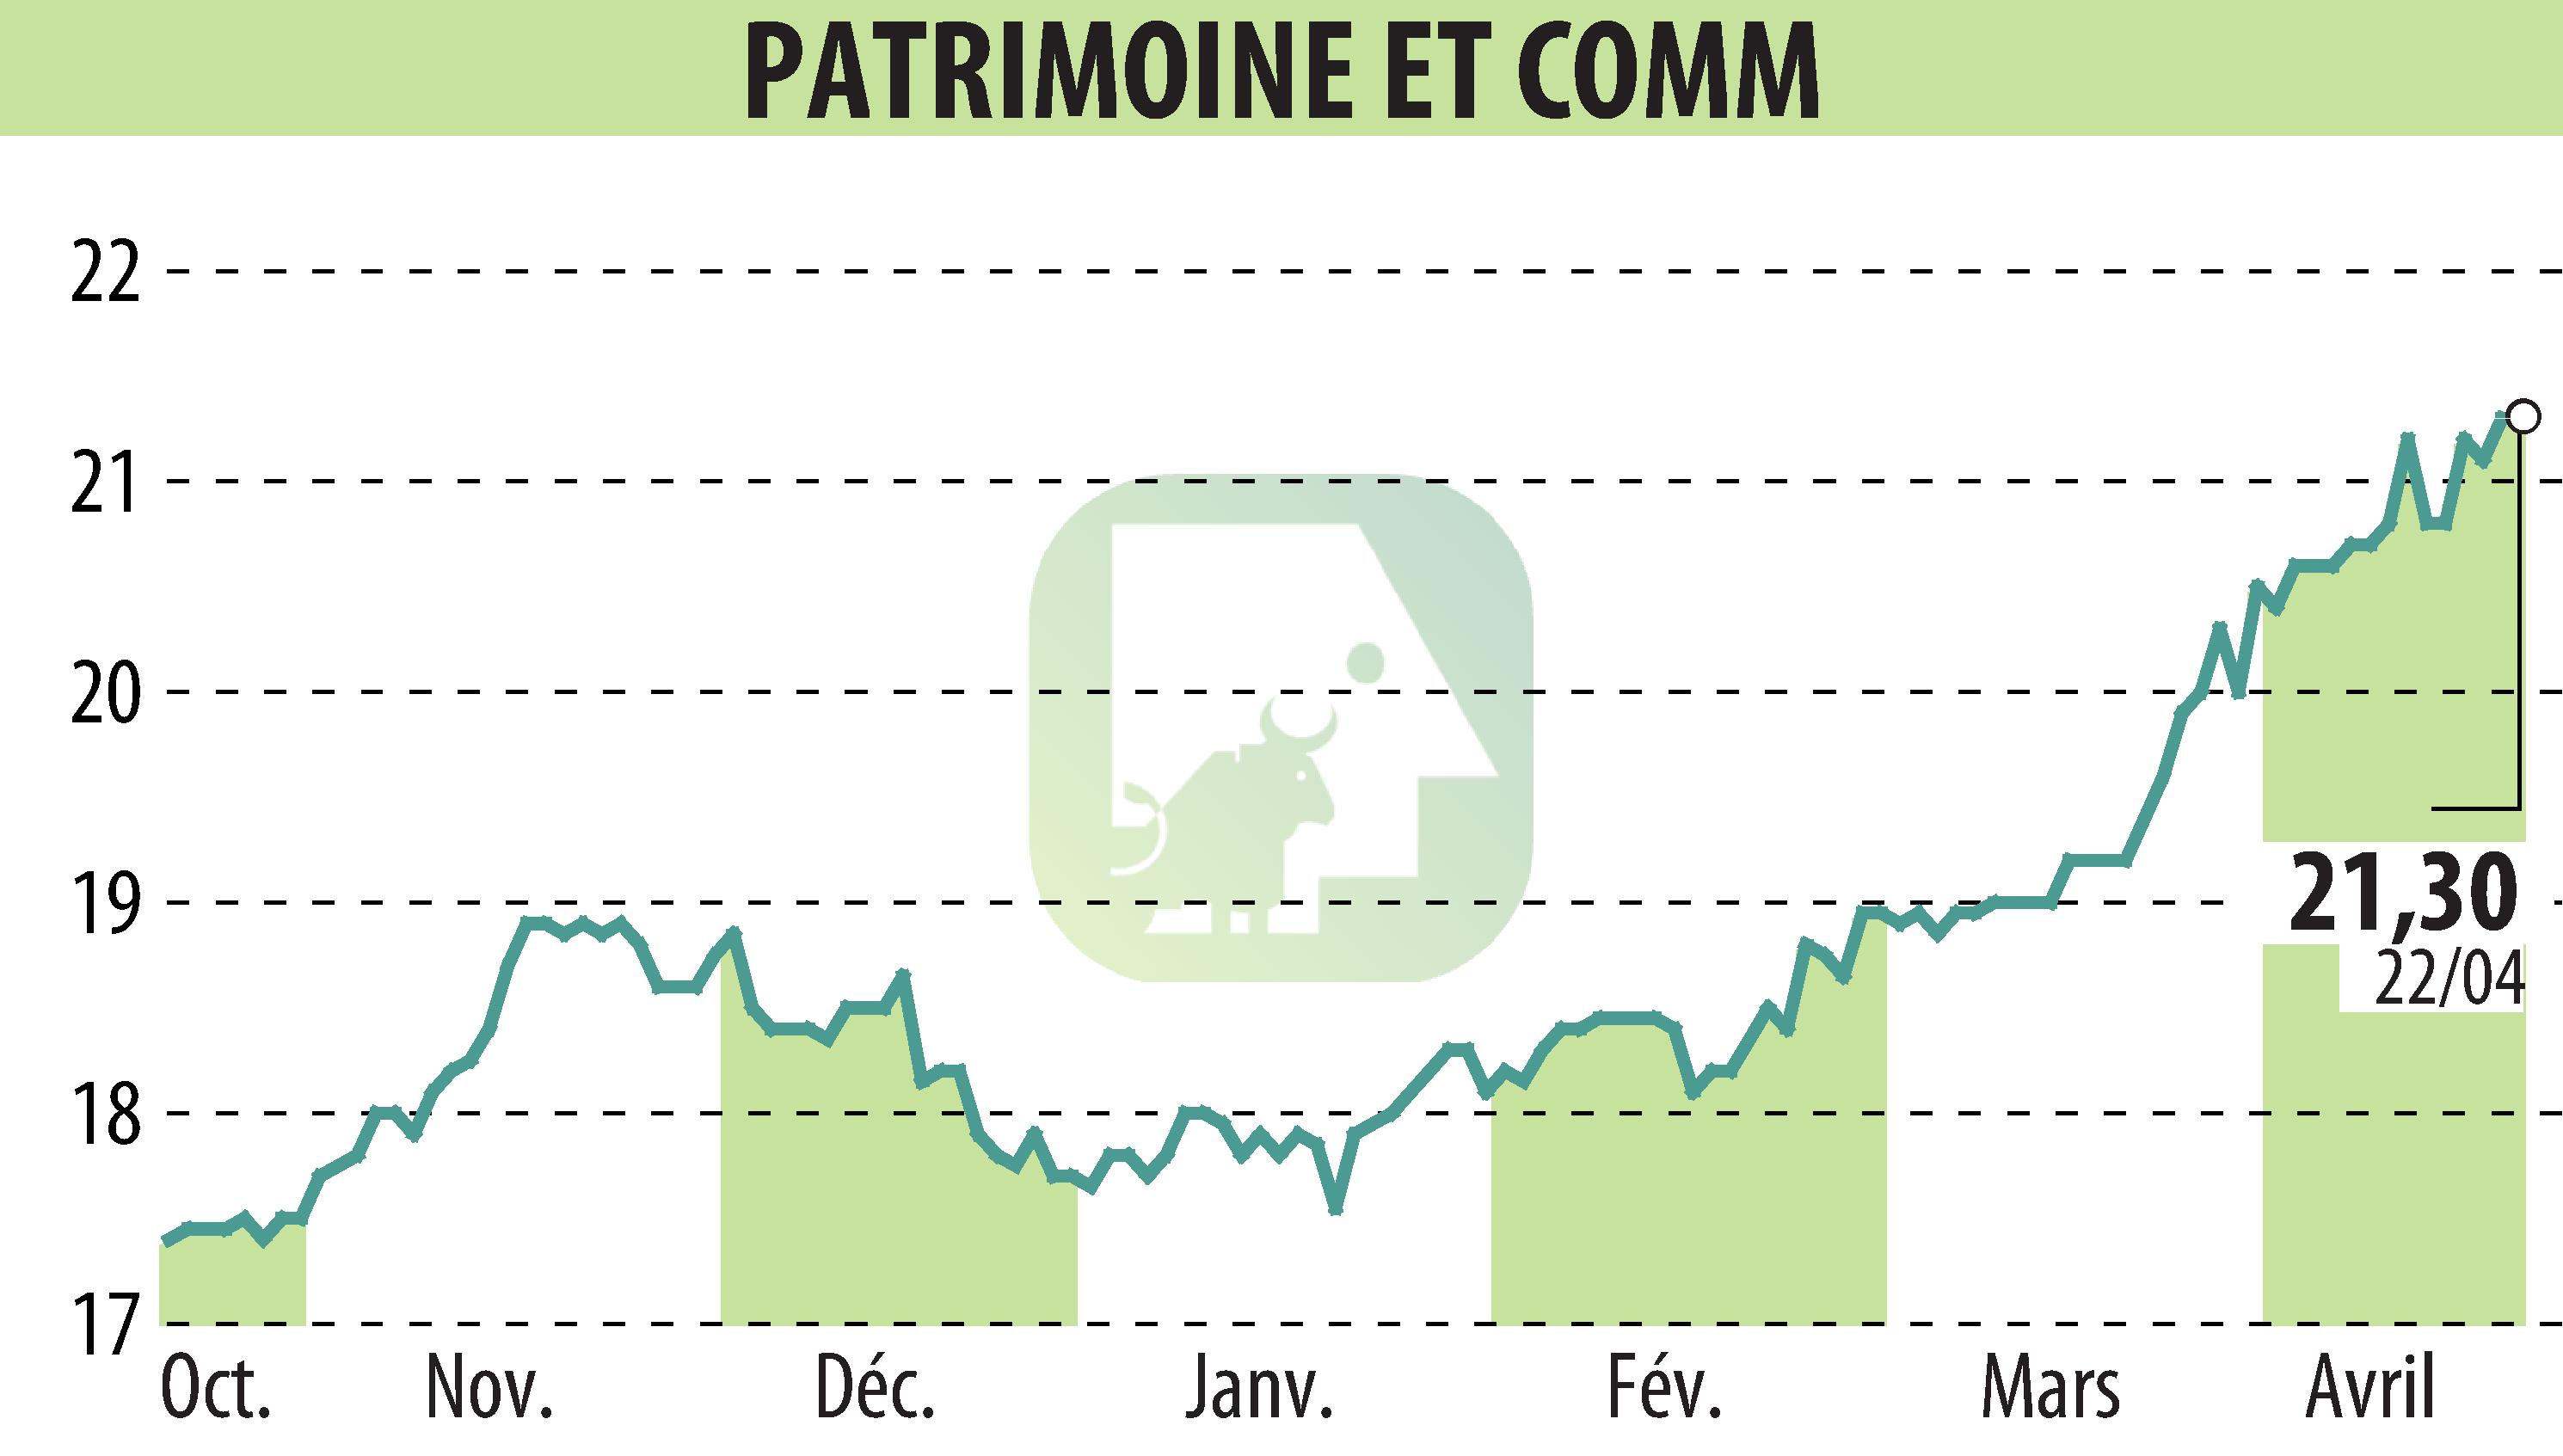 Stock price chart of PATRIMOINE ET COMMERCE  (EPA:PAT) showing fluctuations.